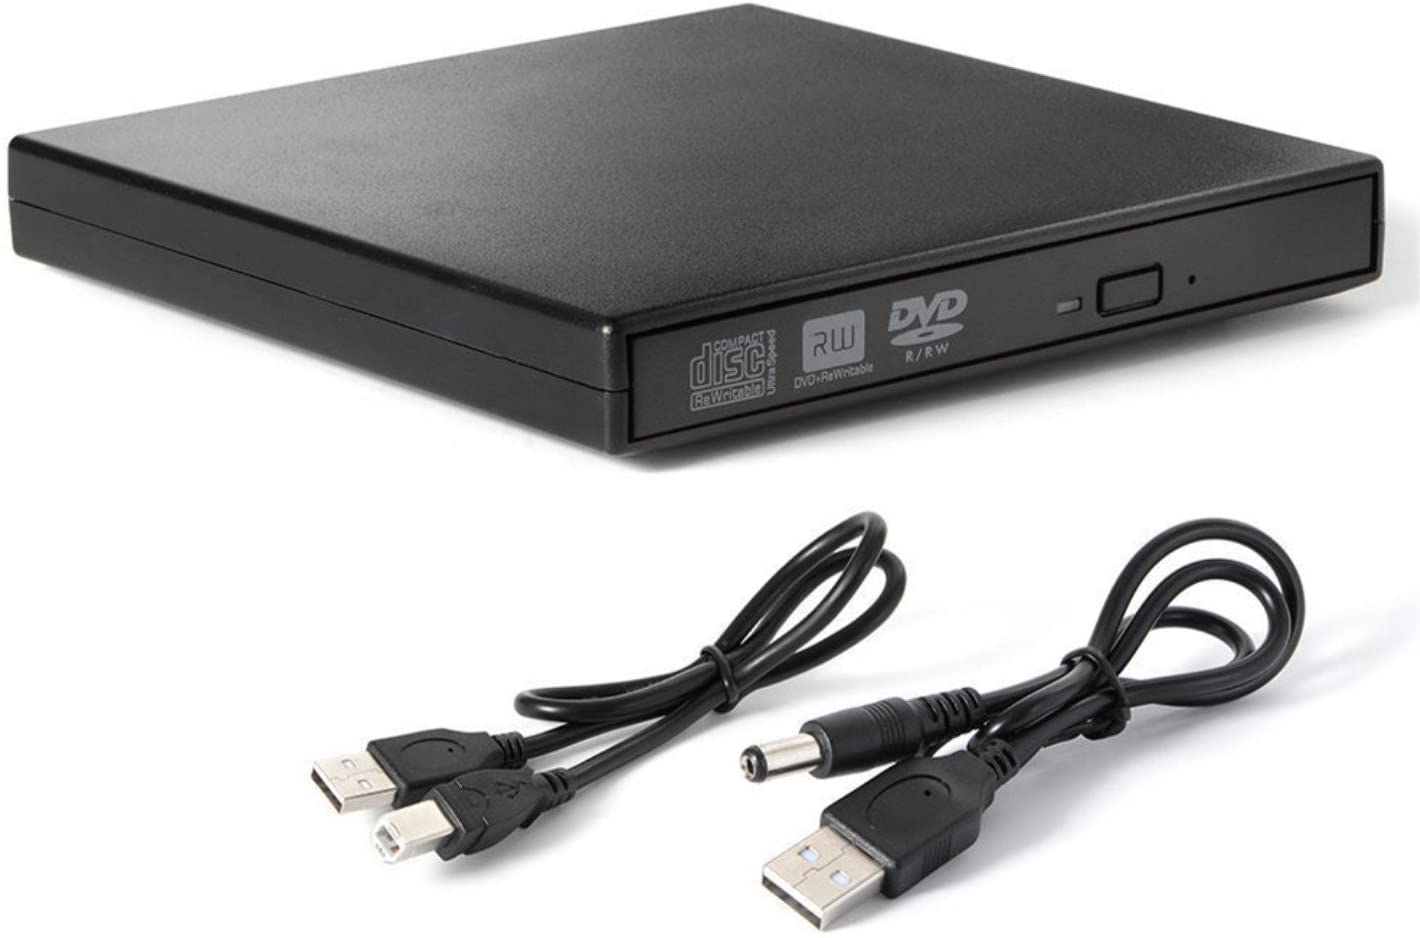 USB 2.0 Type C Slim External 8X DVDRW DVD CD RW ROM Burner - e4cents